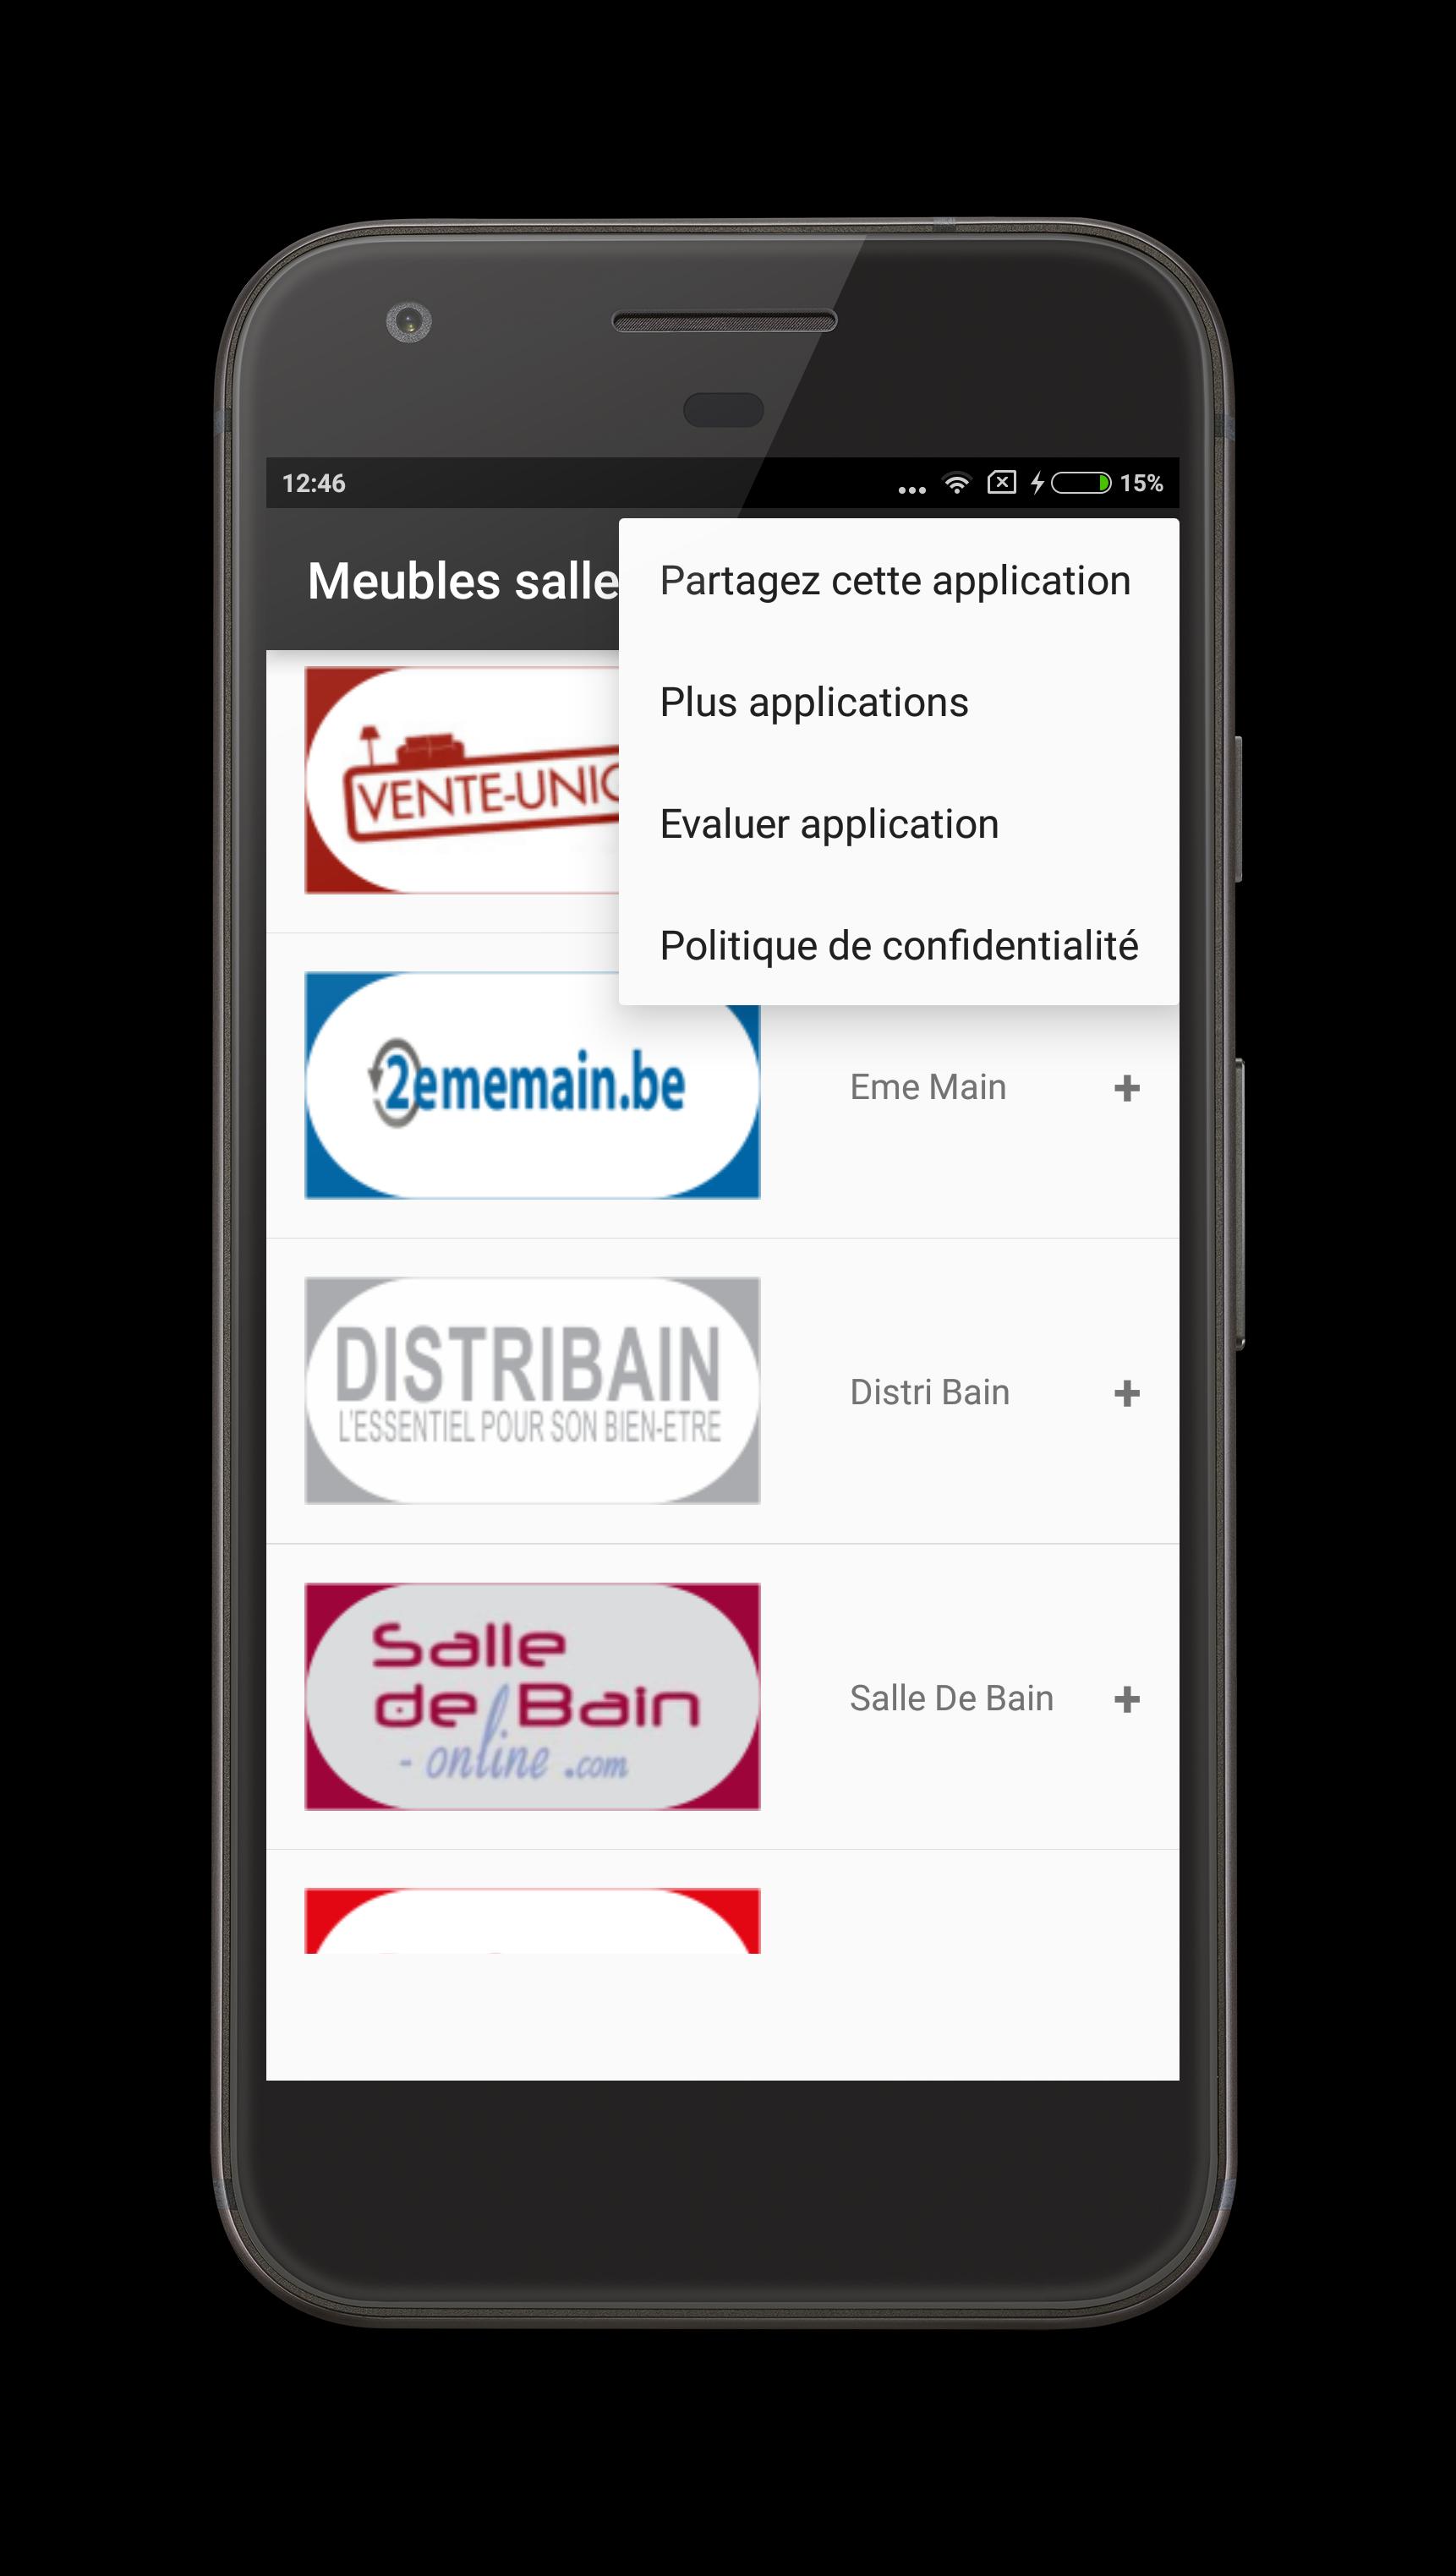 Meuble Salle De Bain France For Android Apk Download